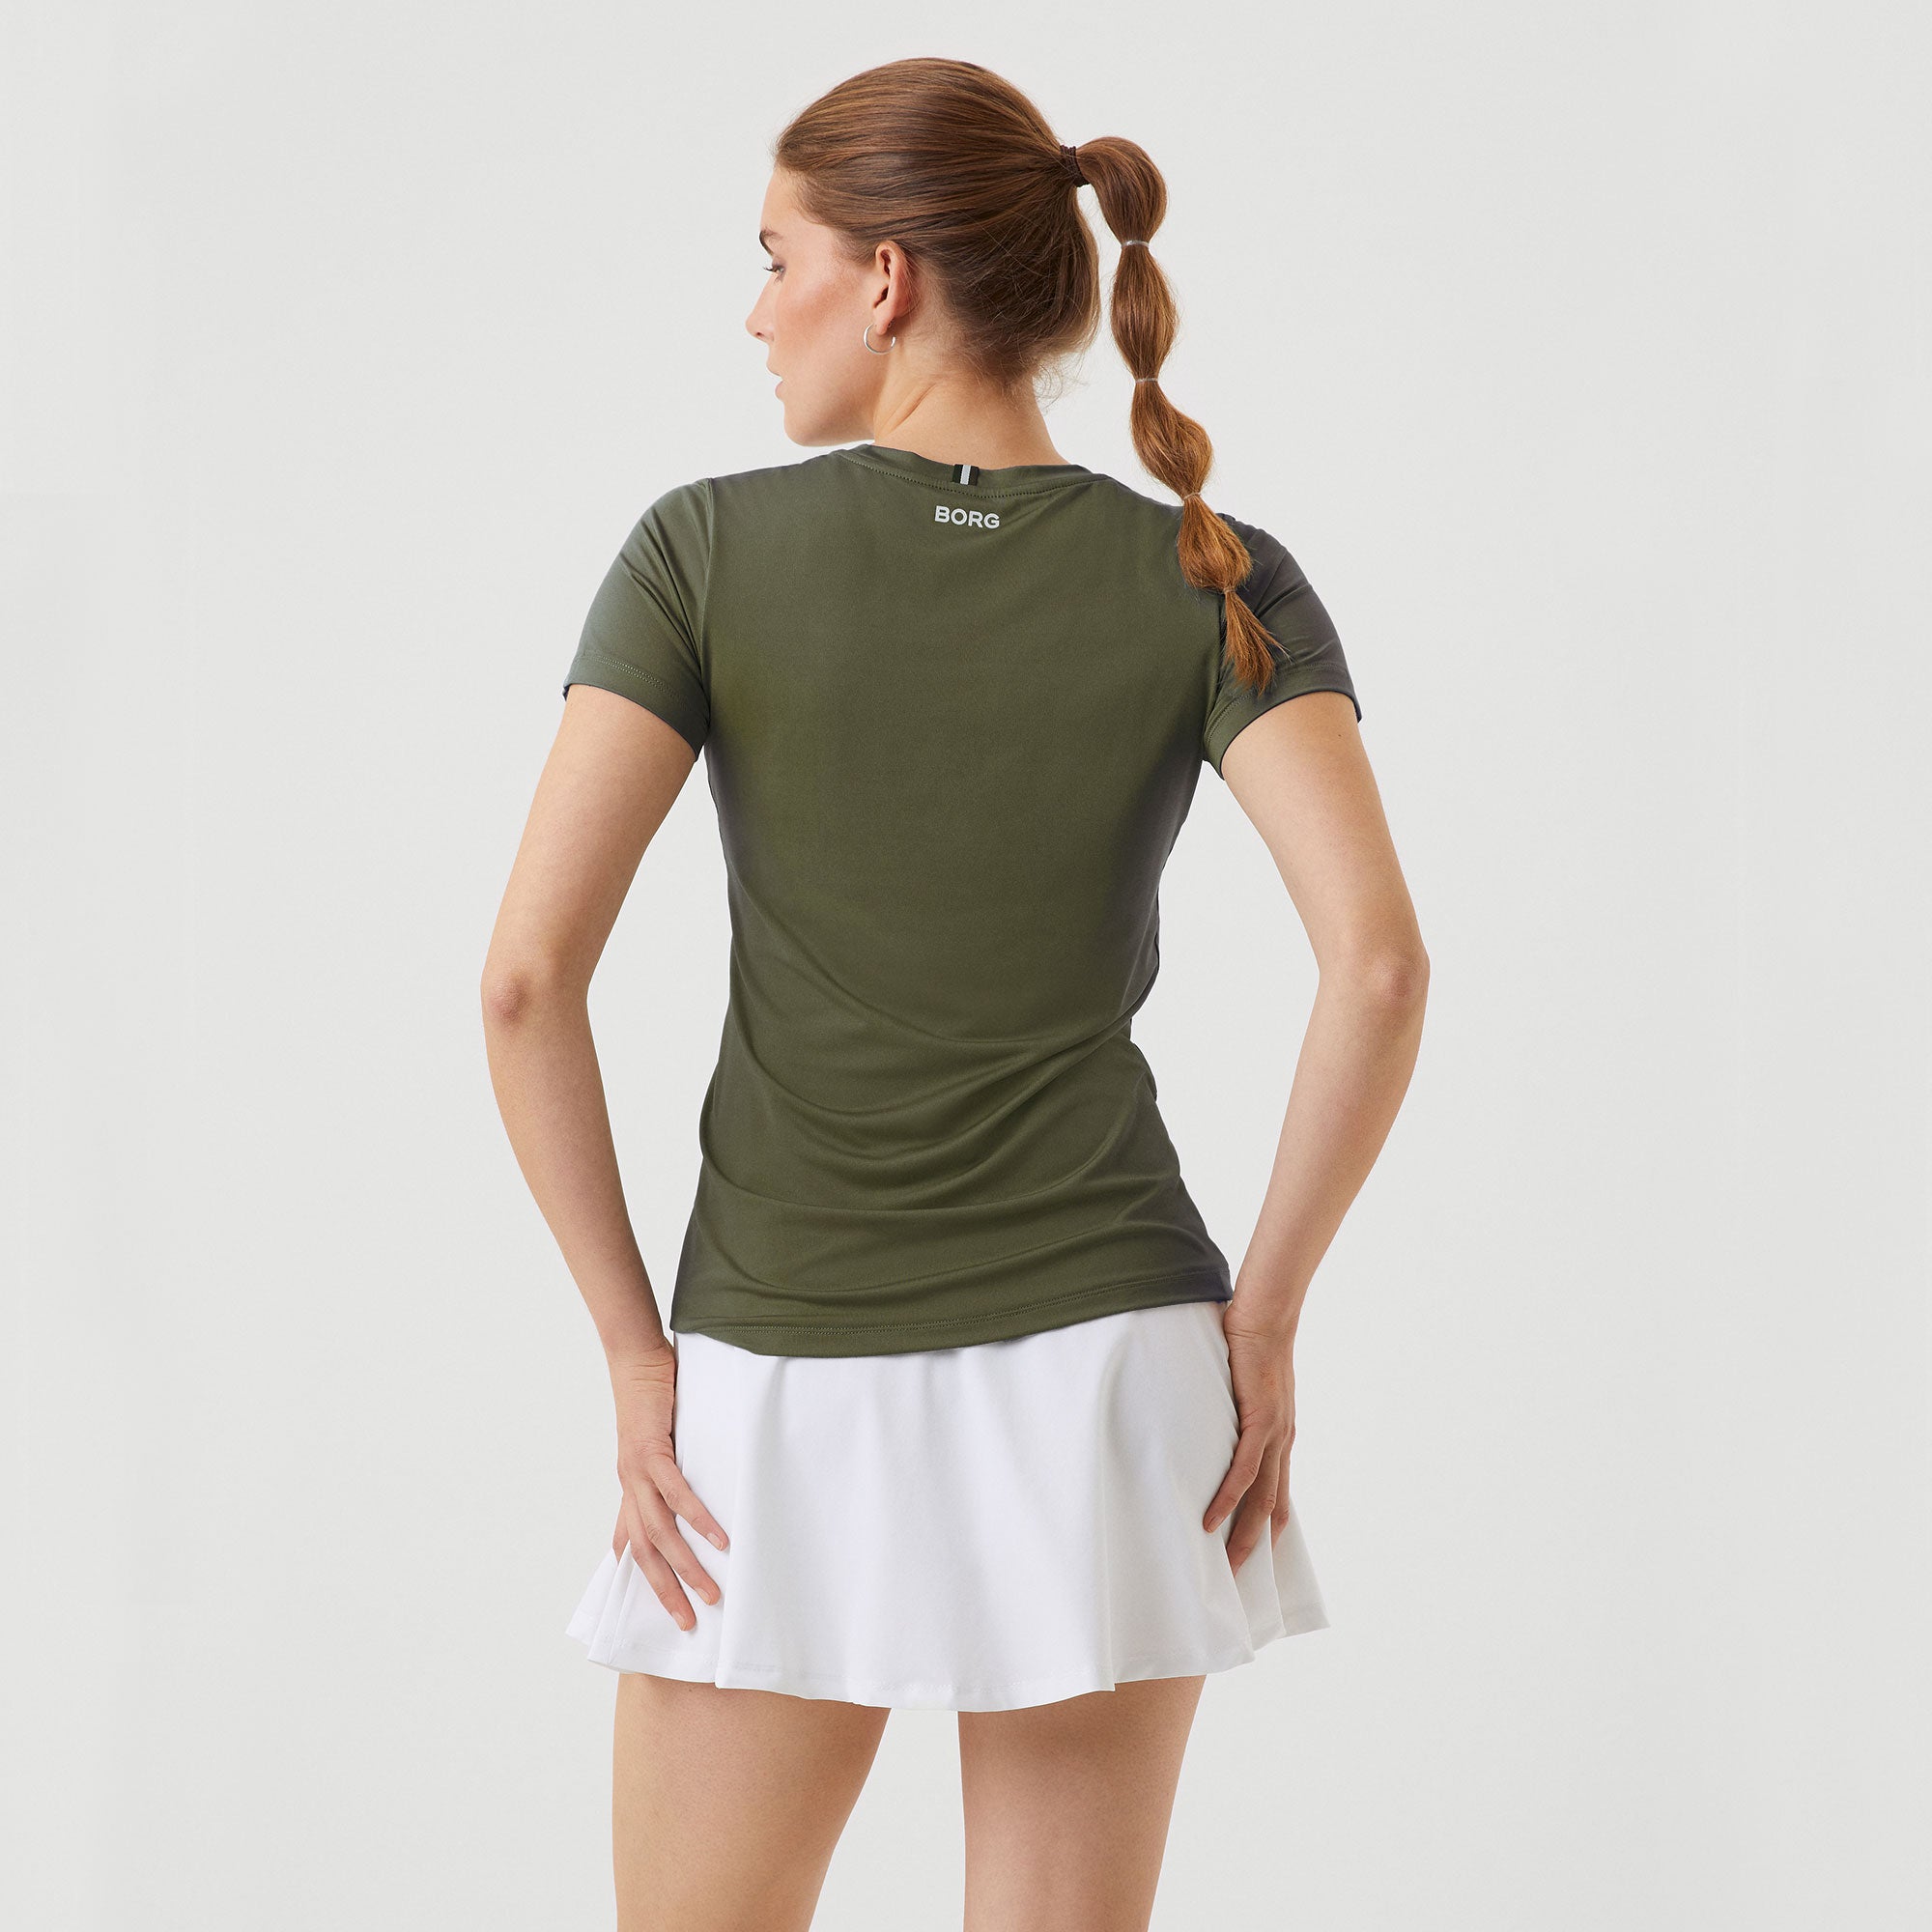 Björn Borg Ace Women's Slim Tennis Shirt - Green (2)